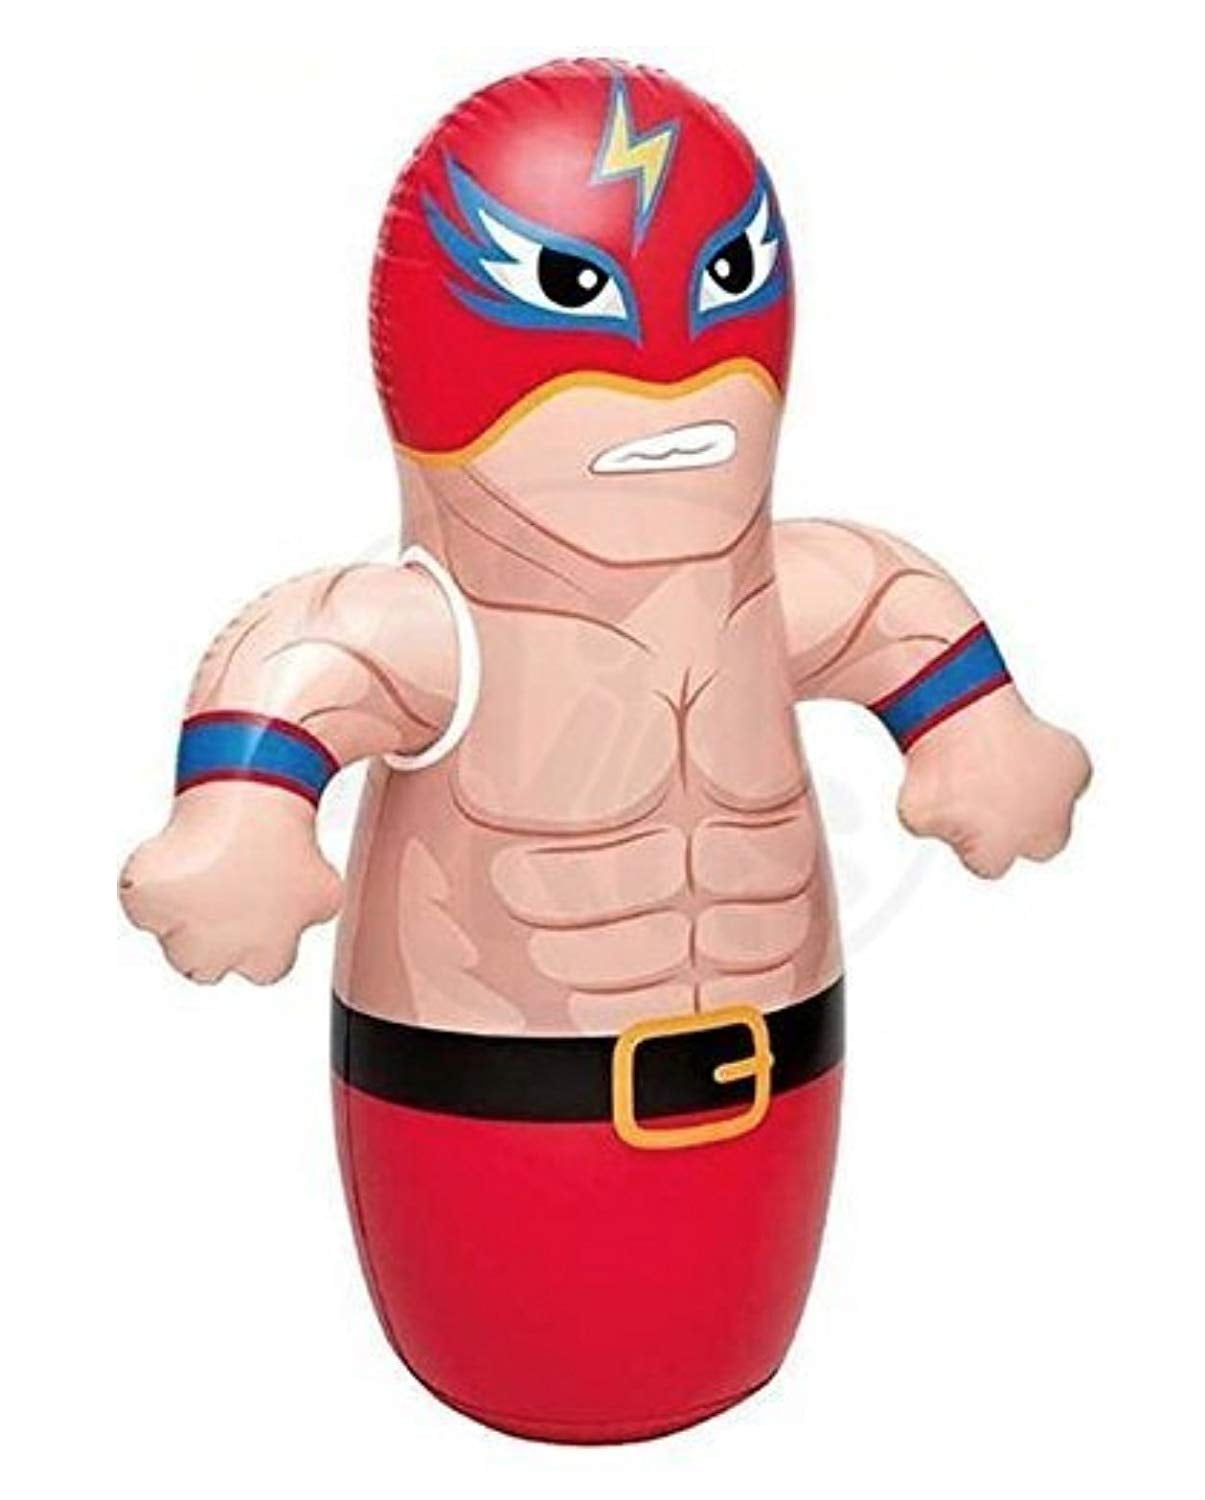 INTEX 3D Bop Bag Boxer Inflatable Blow Up Punching Bag Toy Gift  Kids Fun 